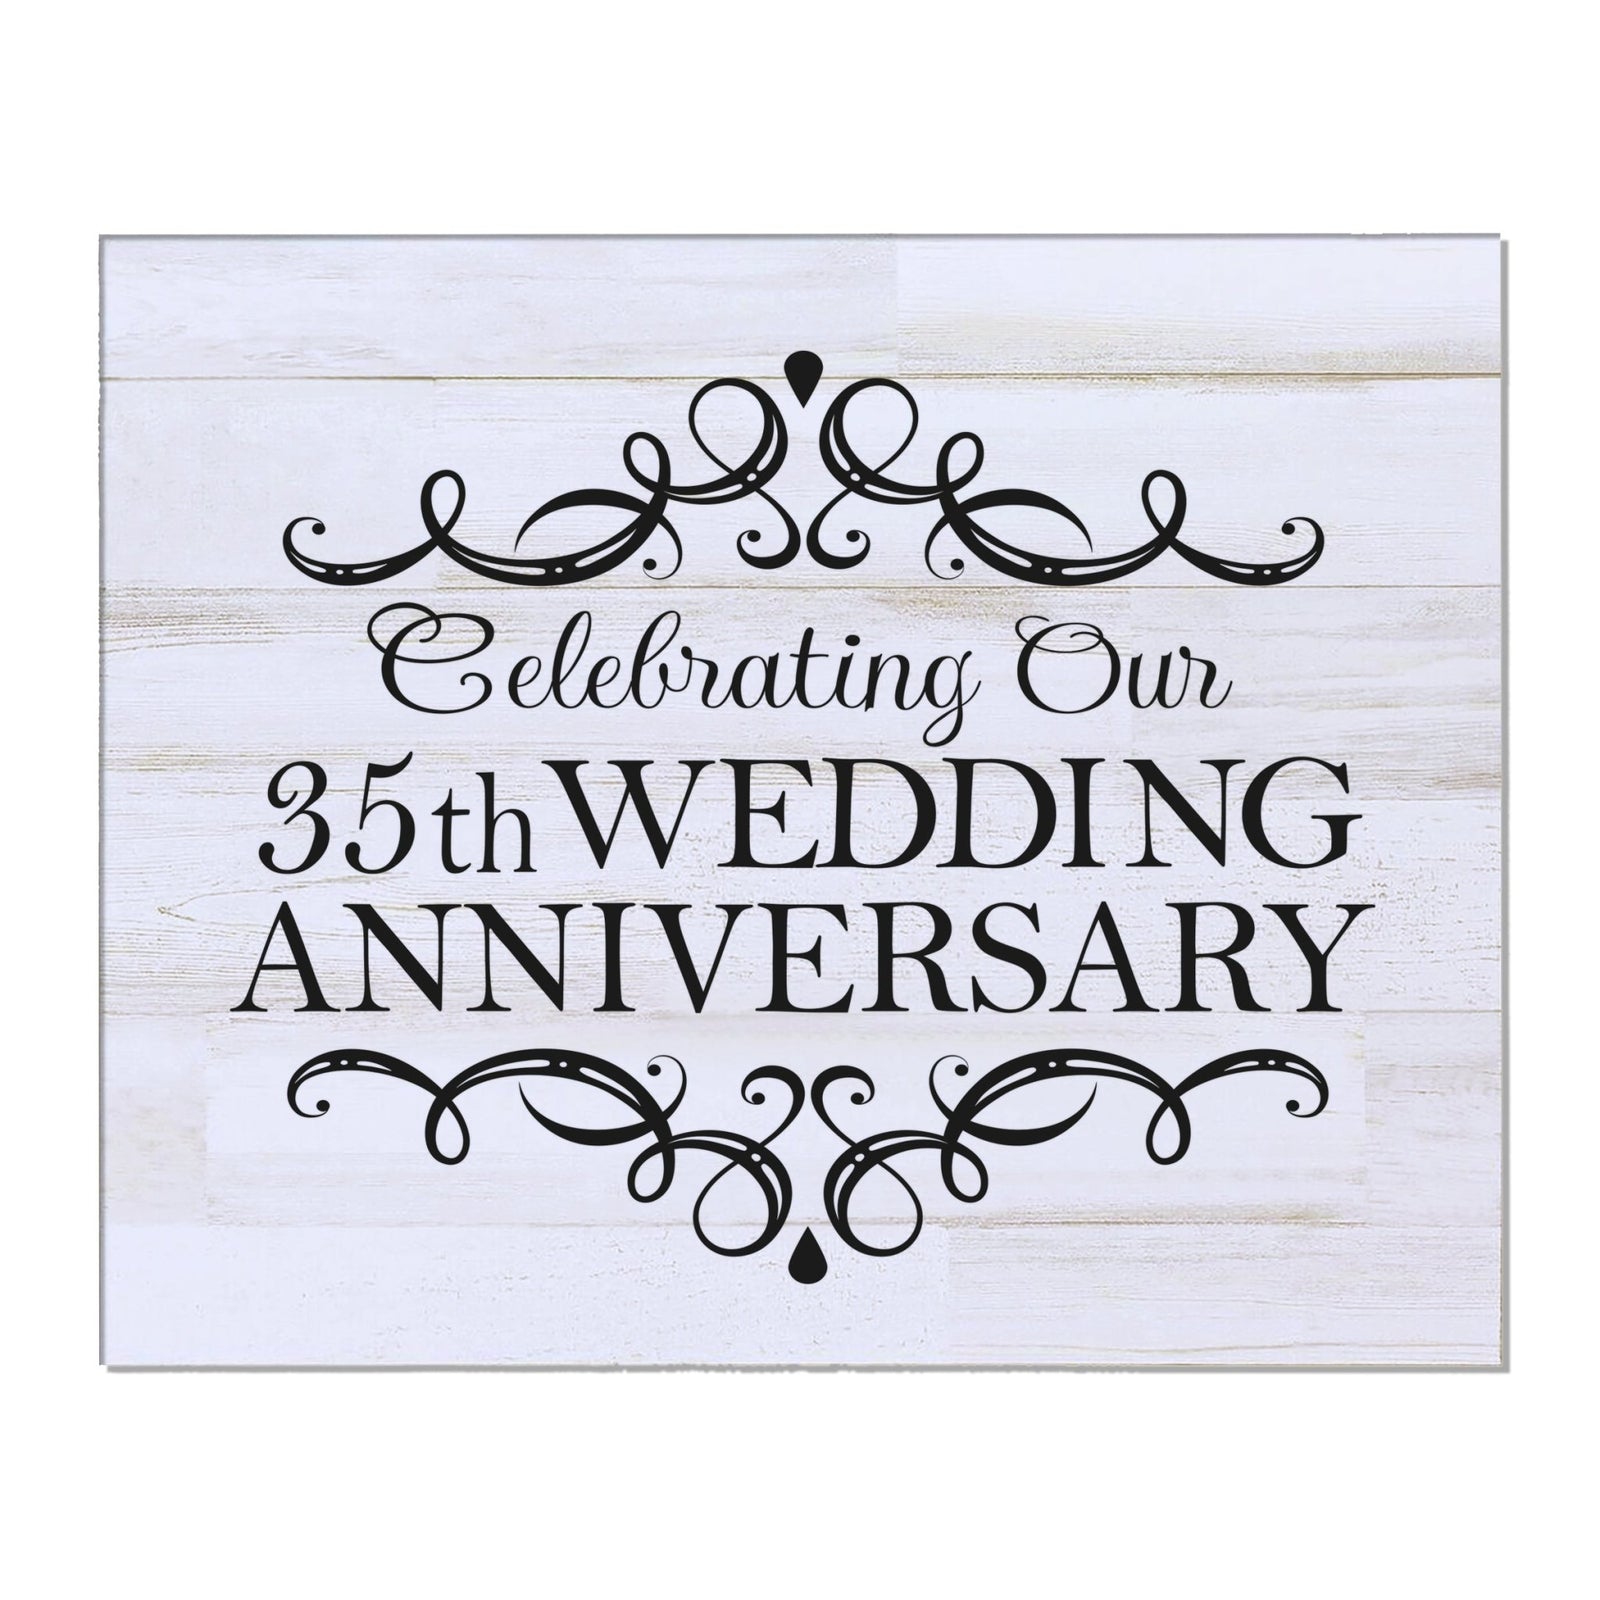 35th Wedding Anniversary Wall Plaque - Celebrating - LifeSong Milestones